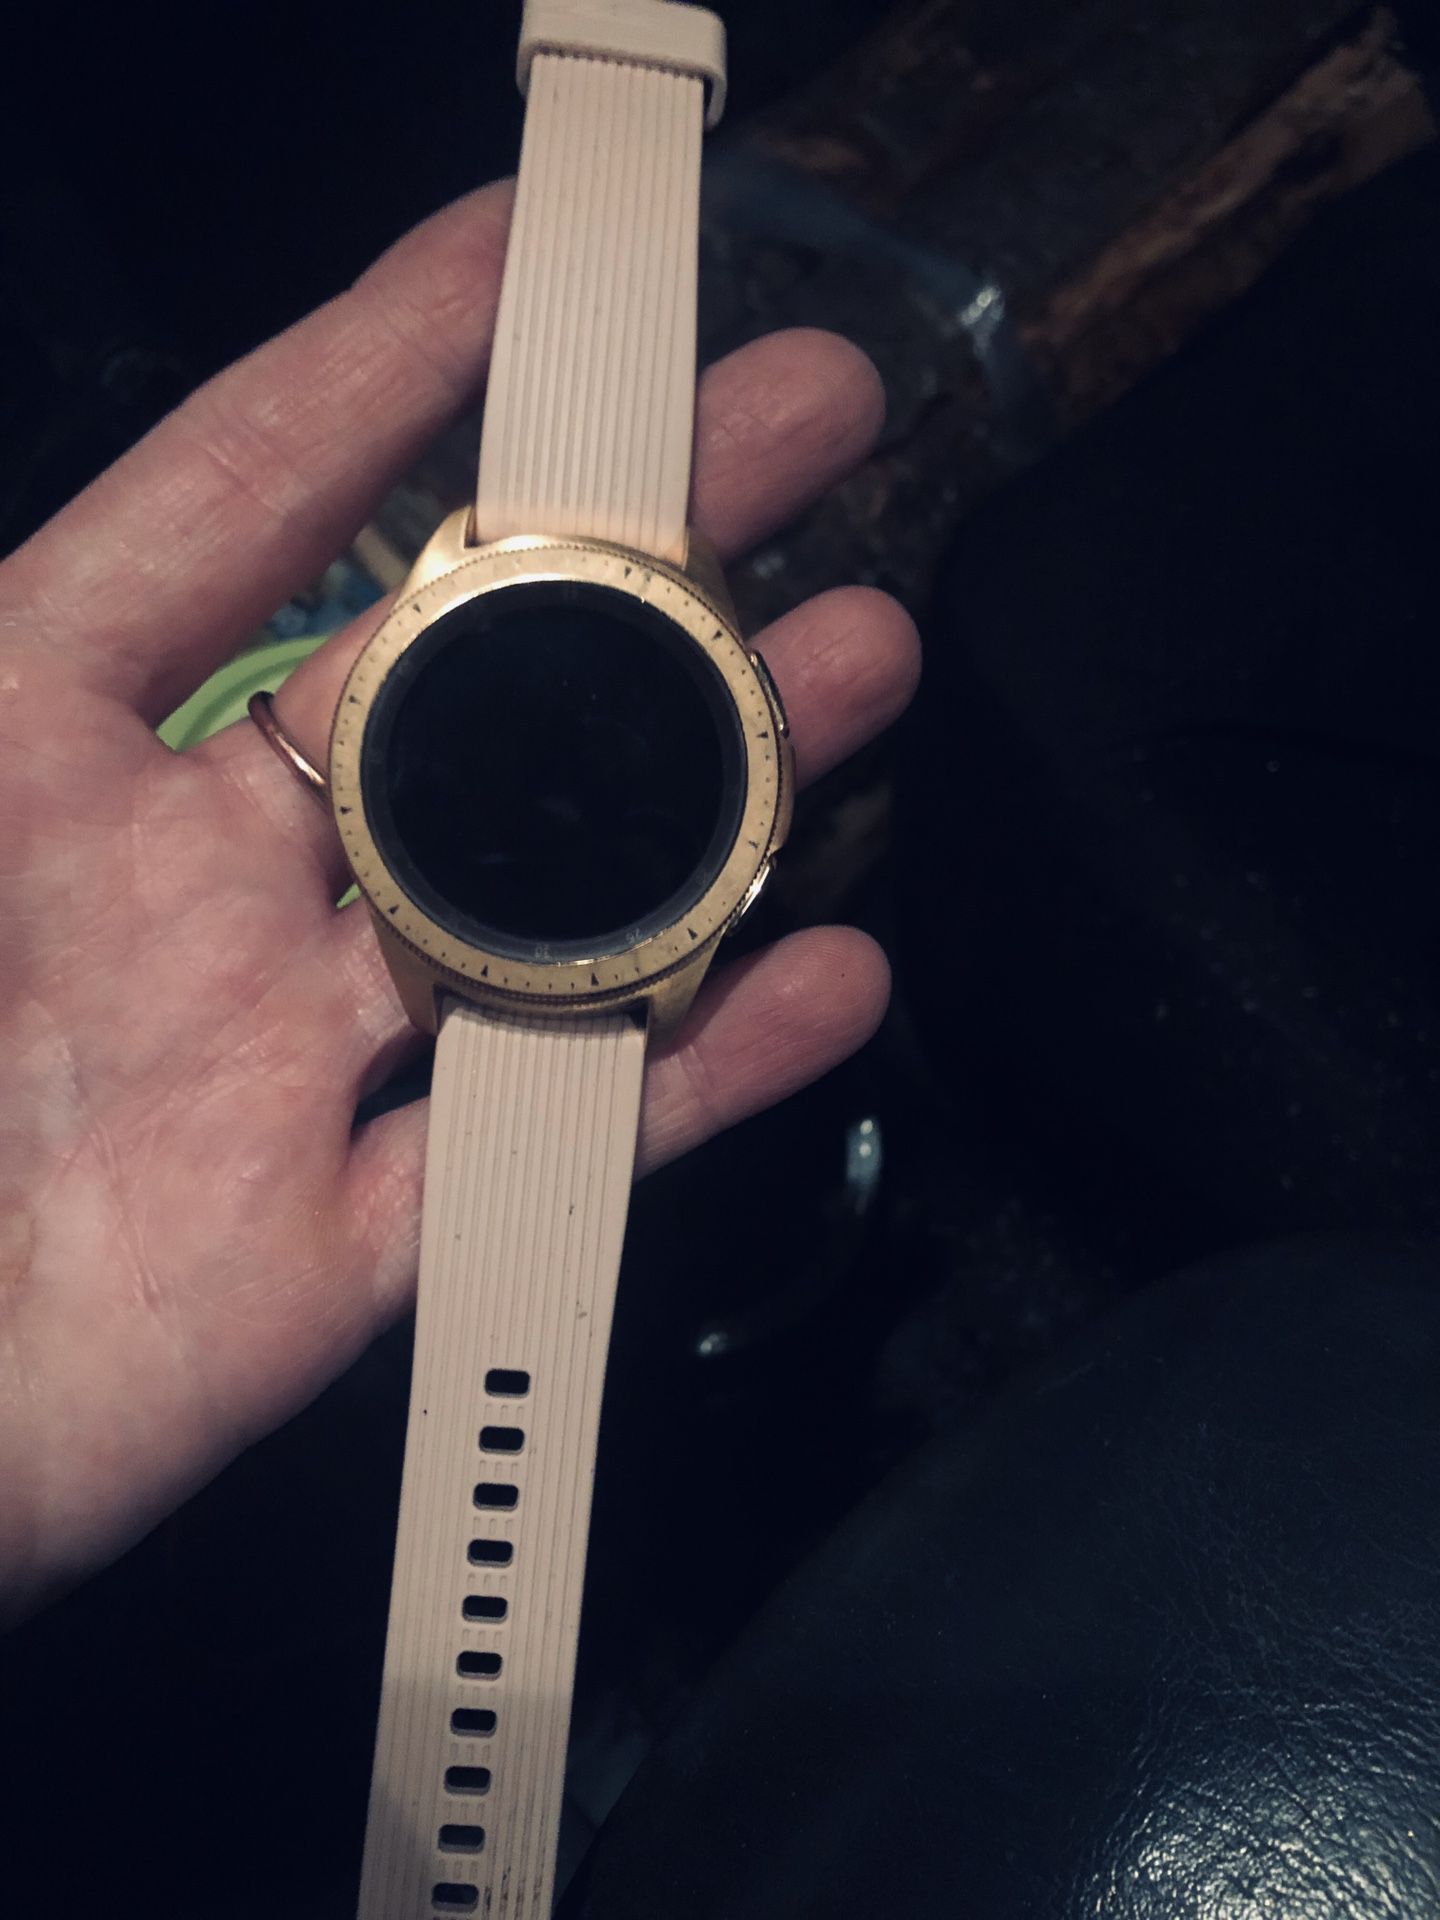 Samsung gear 4 smart watch